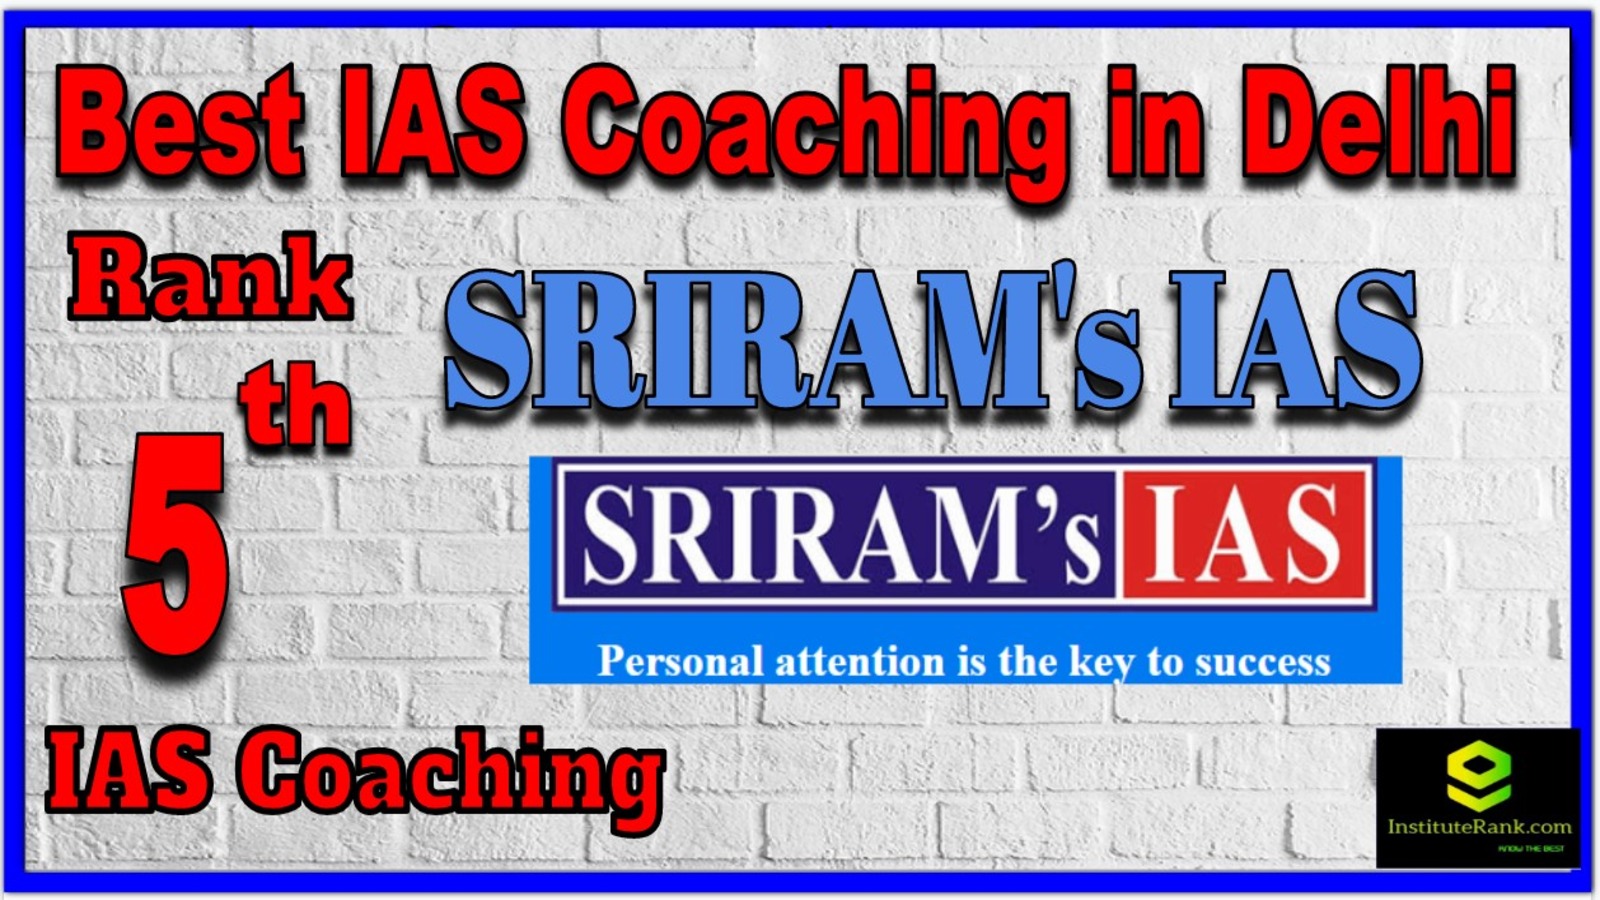 Rank 5th Best IAS Coaching in Delhi